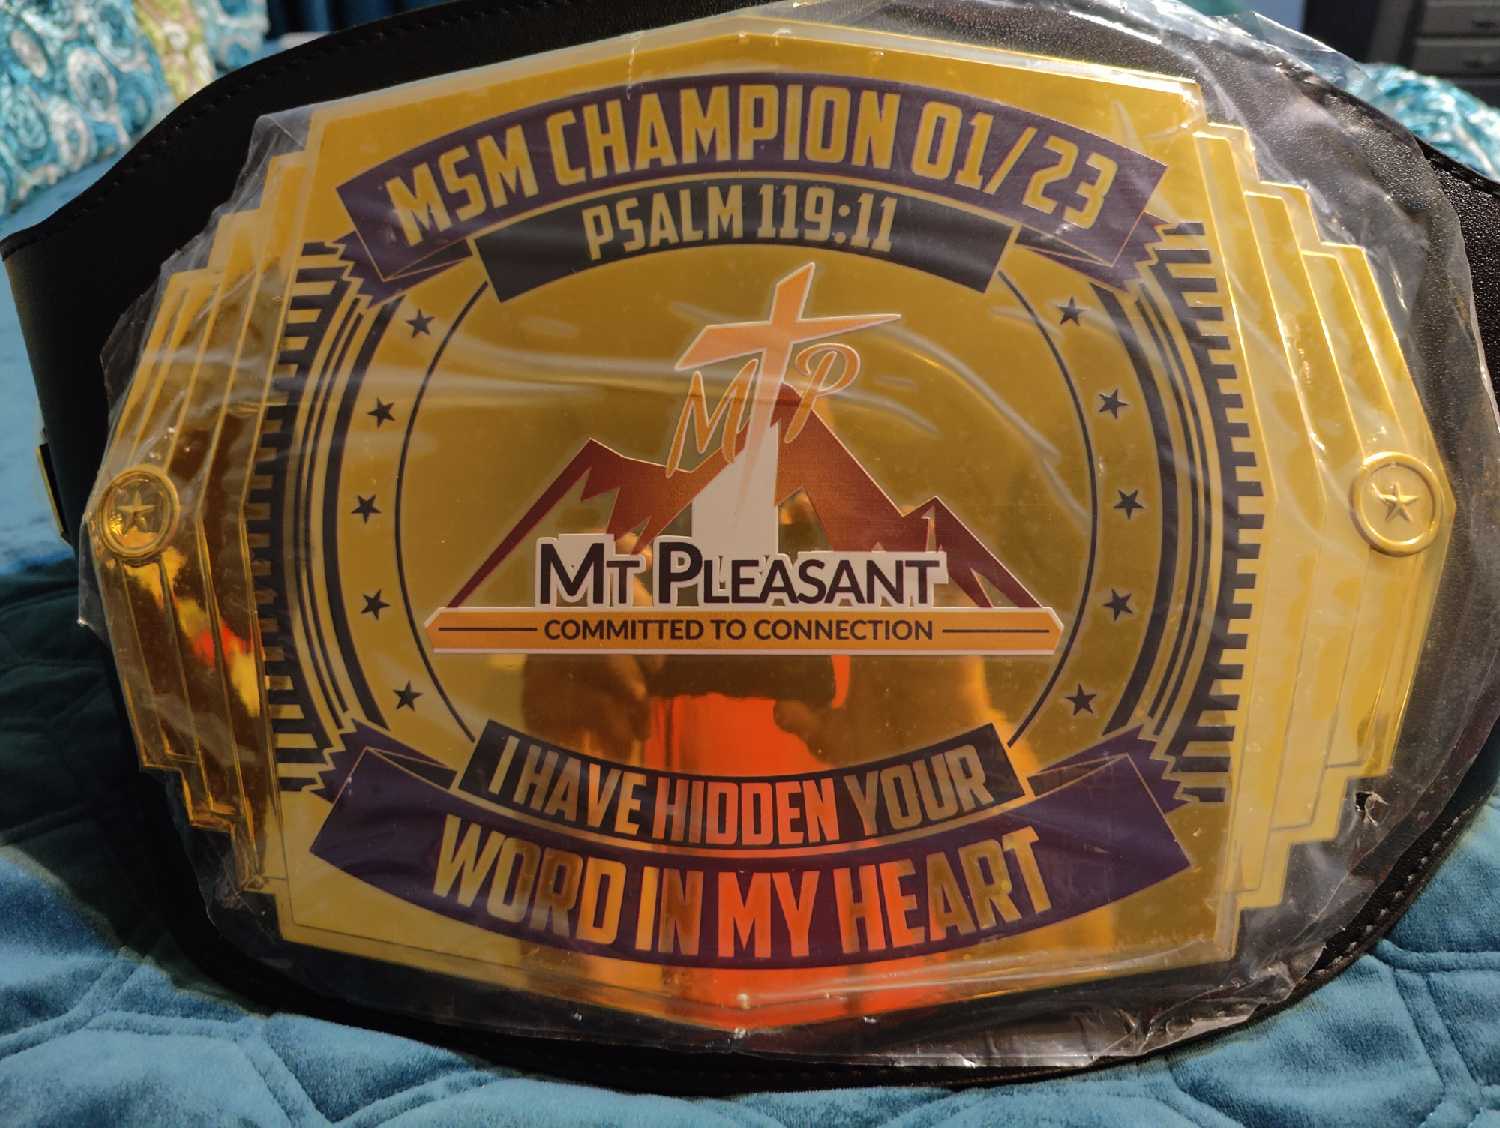 The MSM Championship